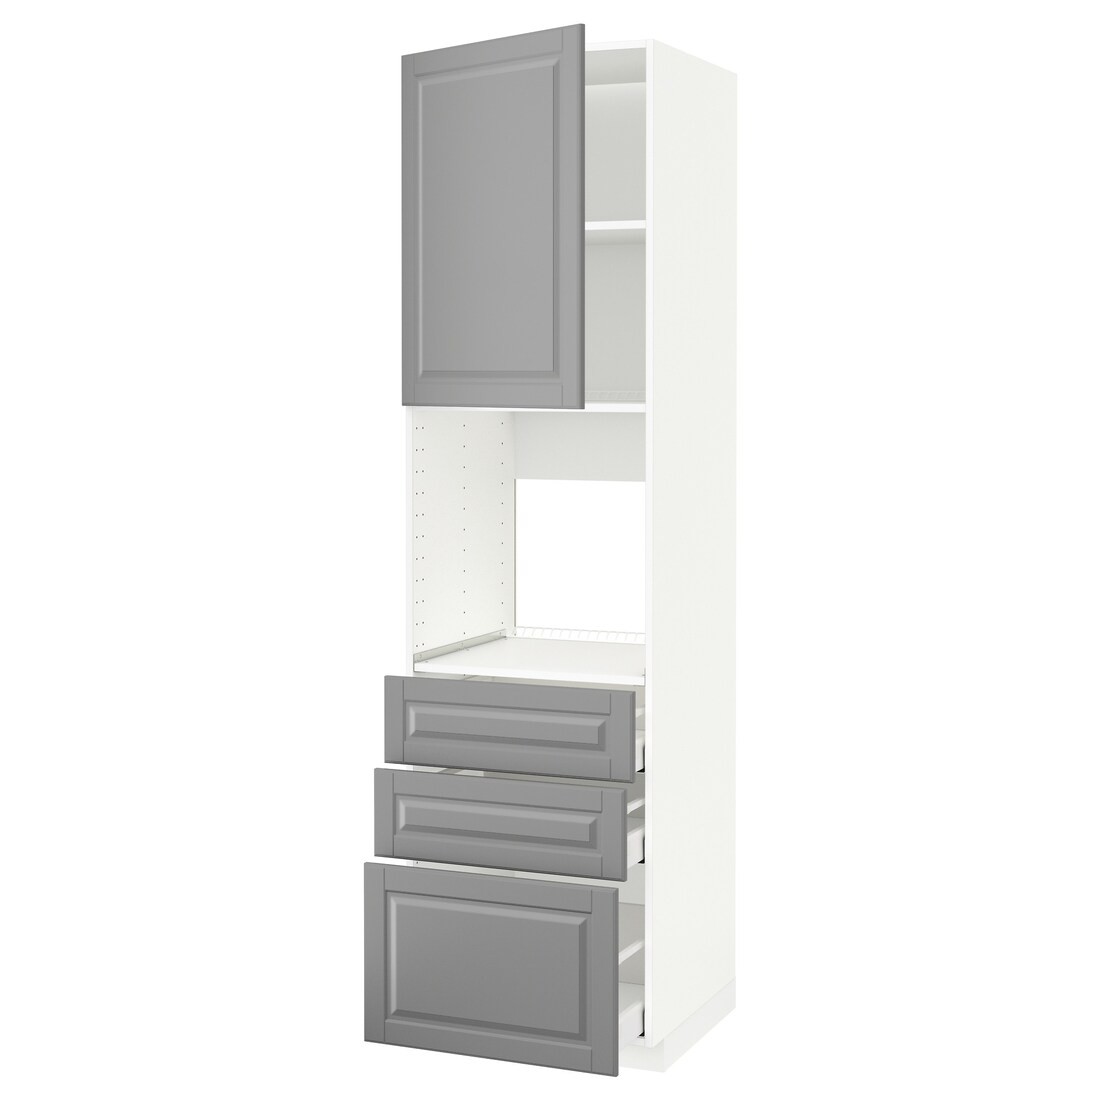 IKEA METOD МЕТОД / MAXIMERA МАКСИМЕРА Высокий шкаф для духовки, белый / Bodbyn серый, 60x60x220 см 49466436 | 494.664.36